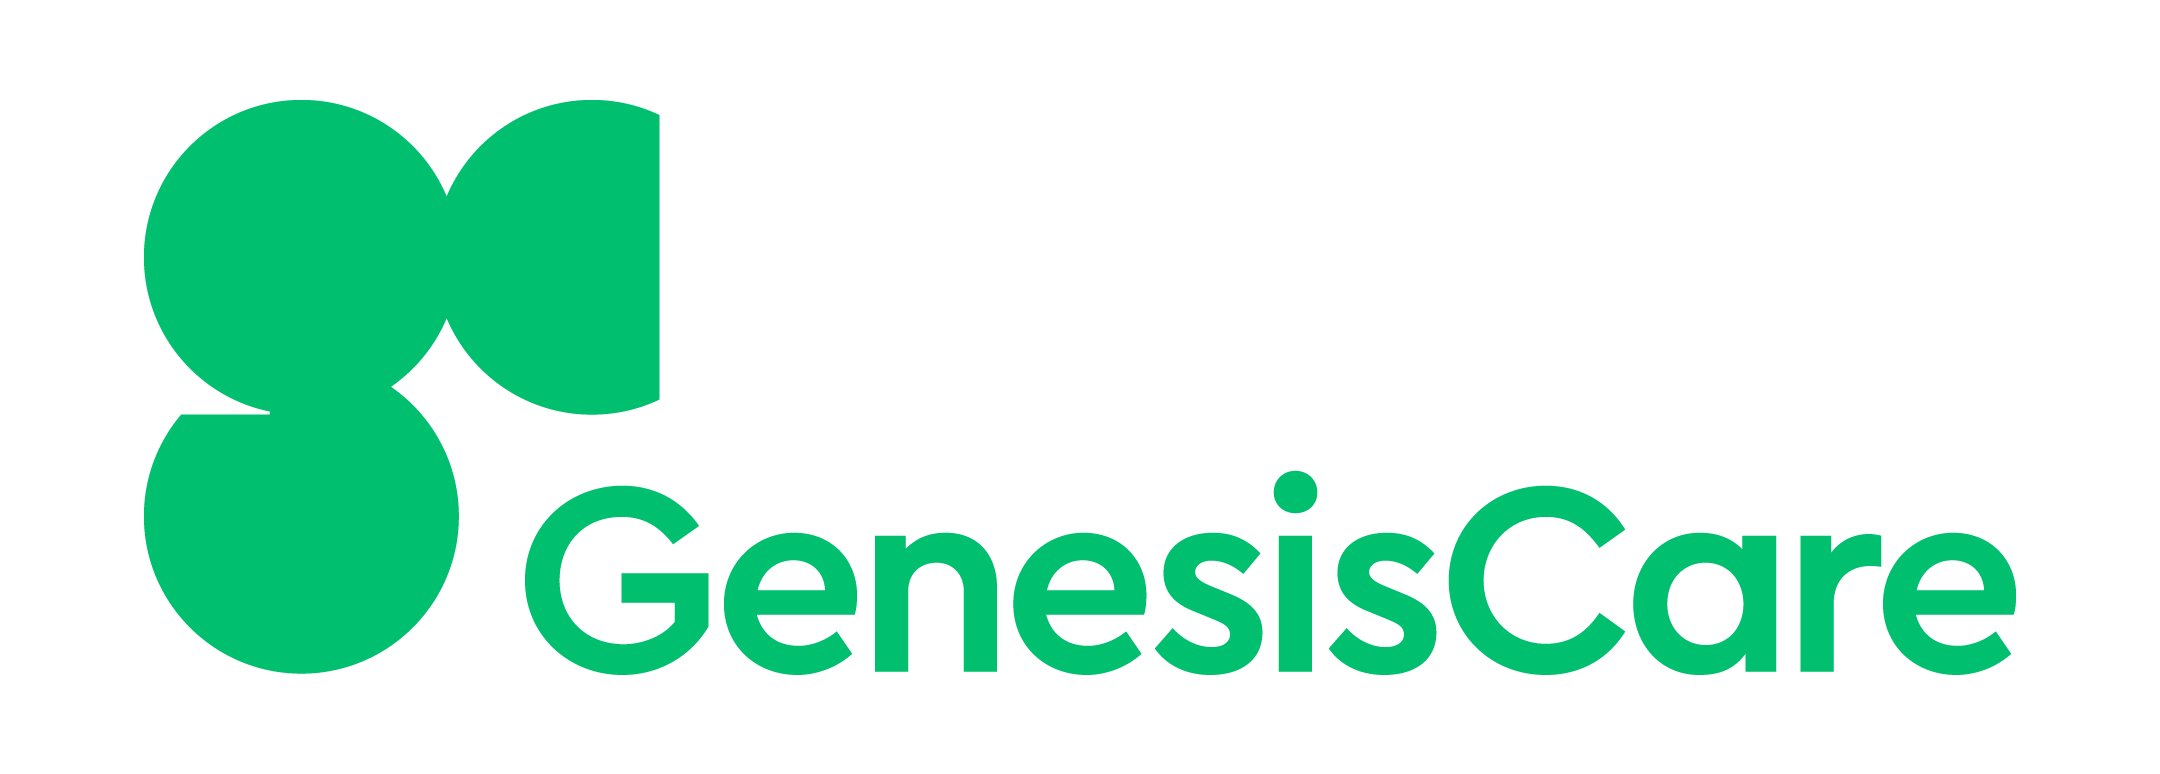 genesis care logo